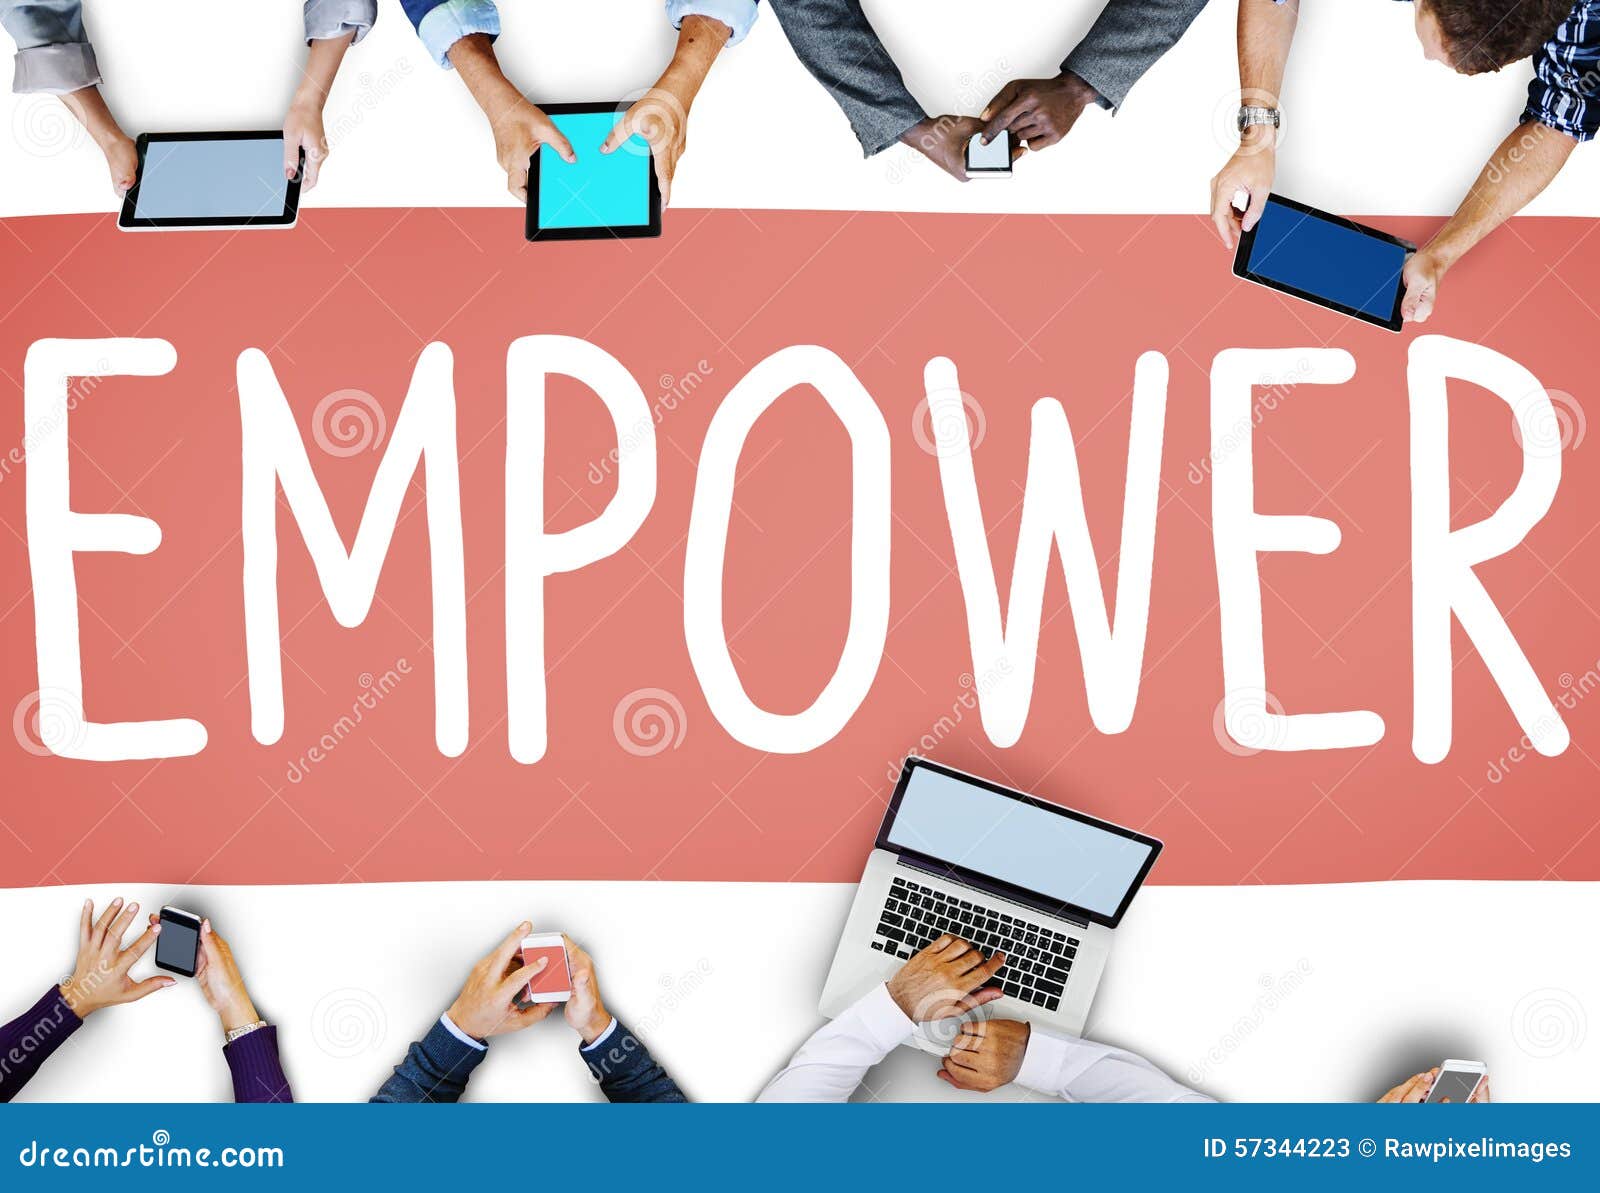 empower authority permission empowerment enhance concept